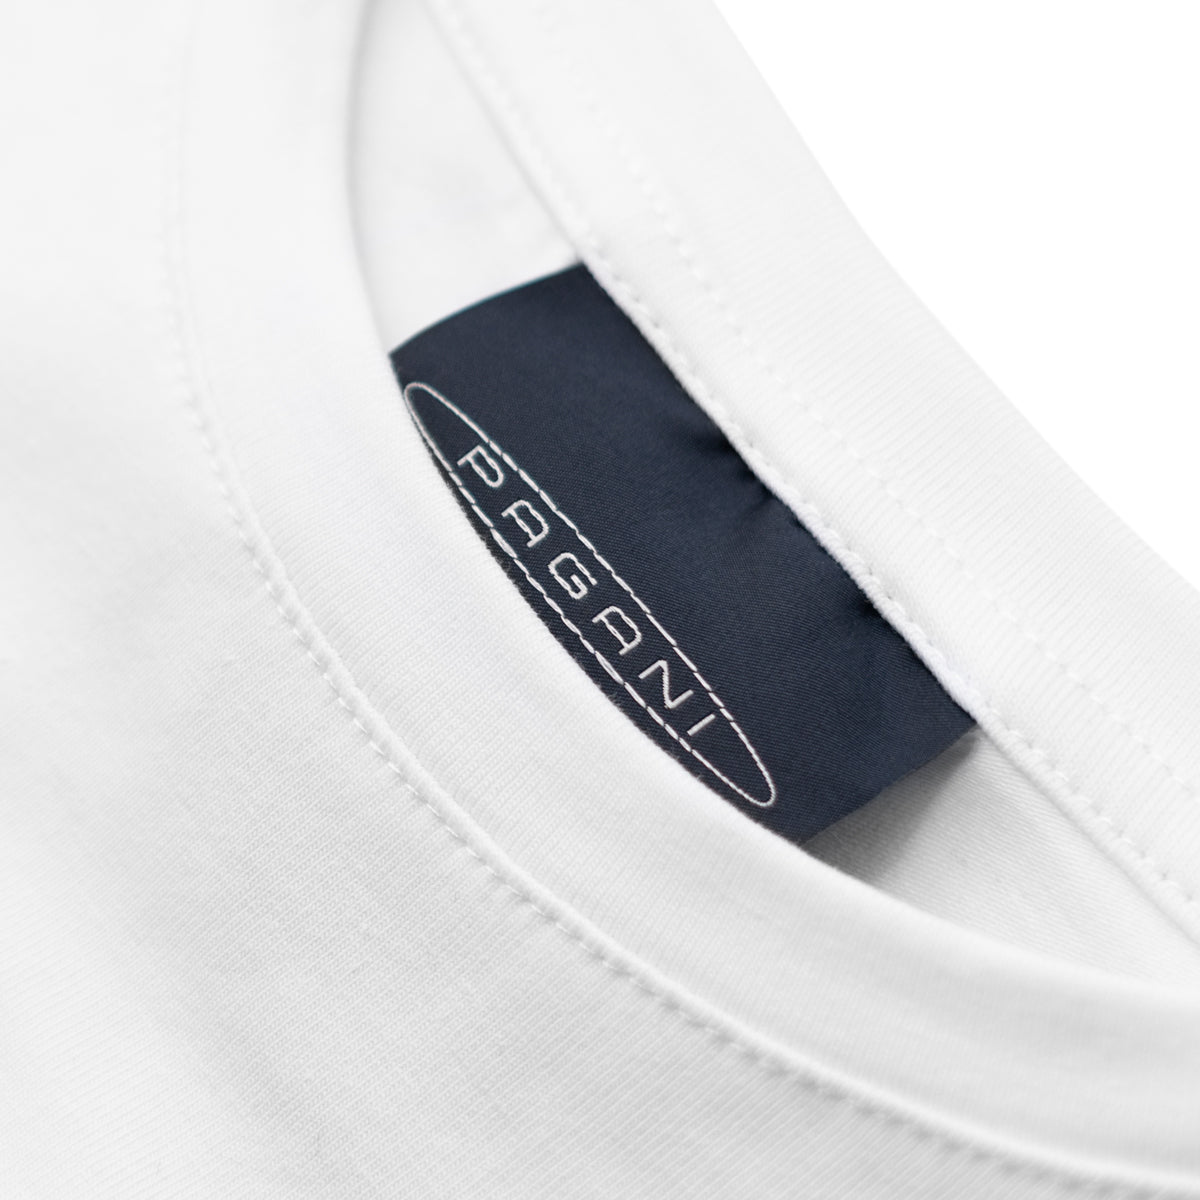 Men's side logo t-shirt white | Team Collection